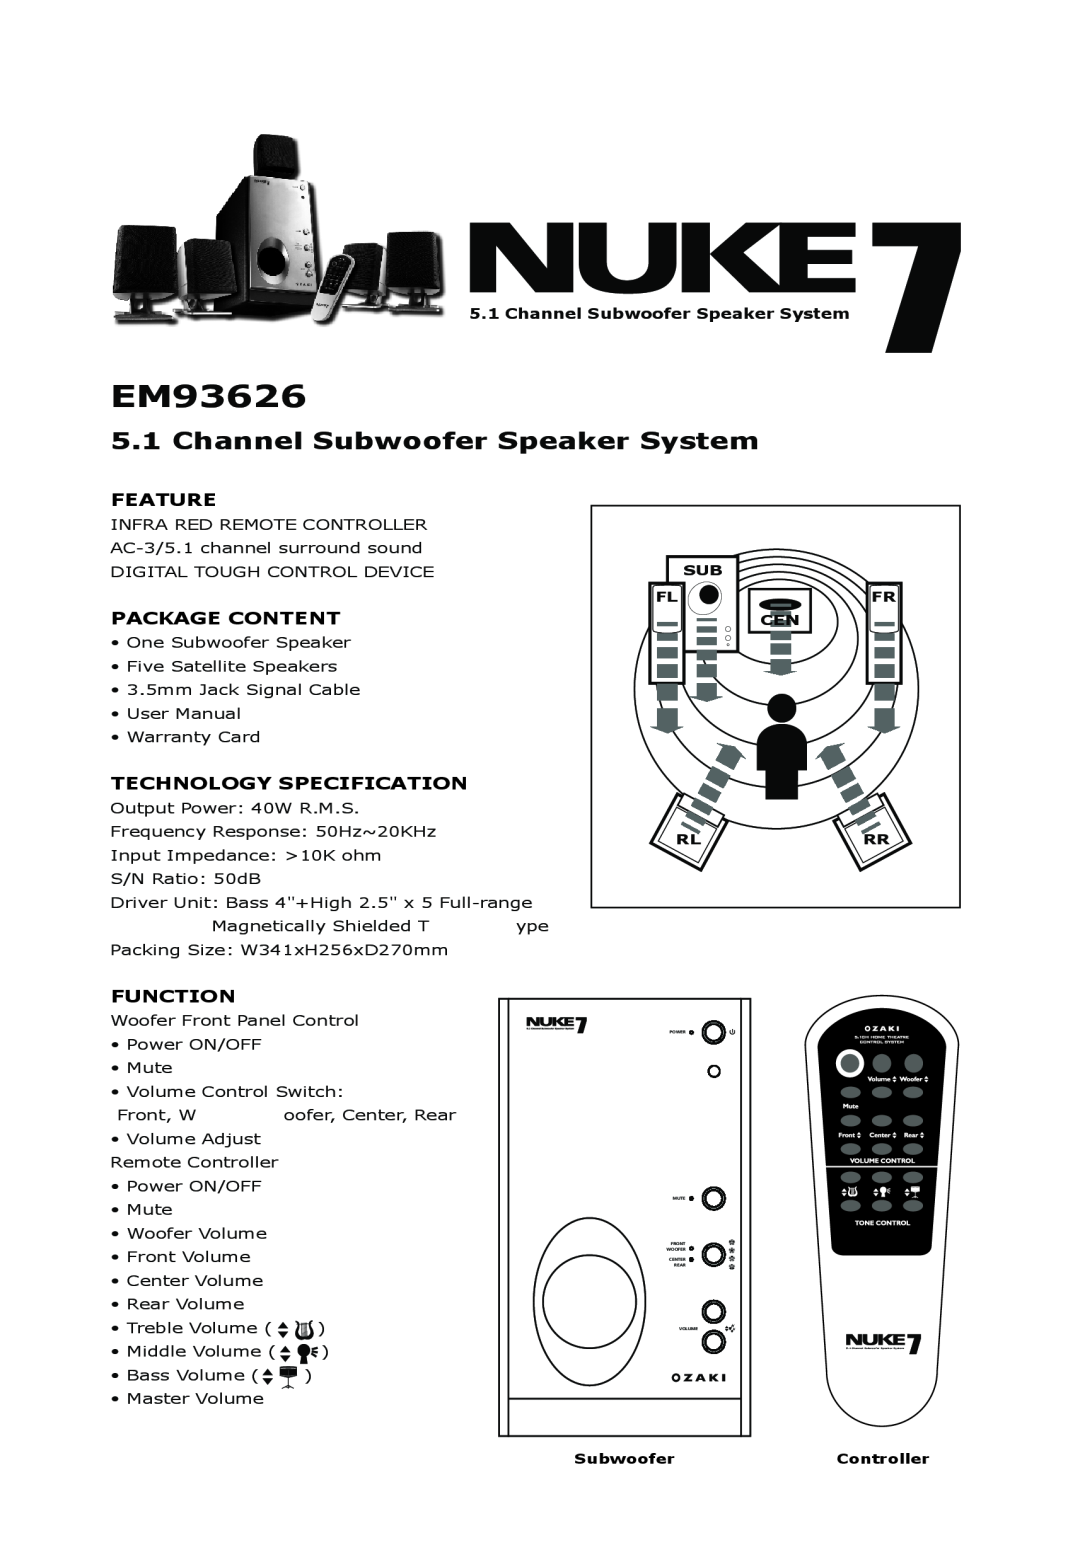 Ozaki Worldwide EM93626 manual Channel Subwoofer Speaker System, Sub Fl Rl, Fr Rr, SubwooferController 